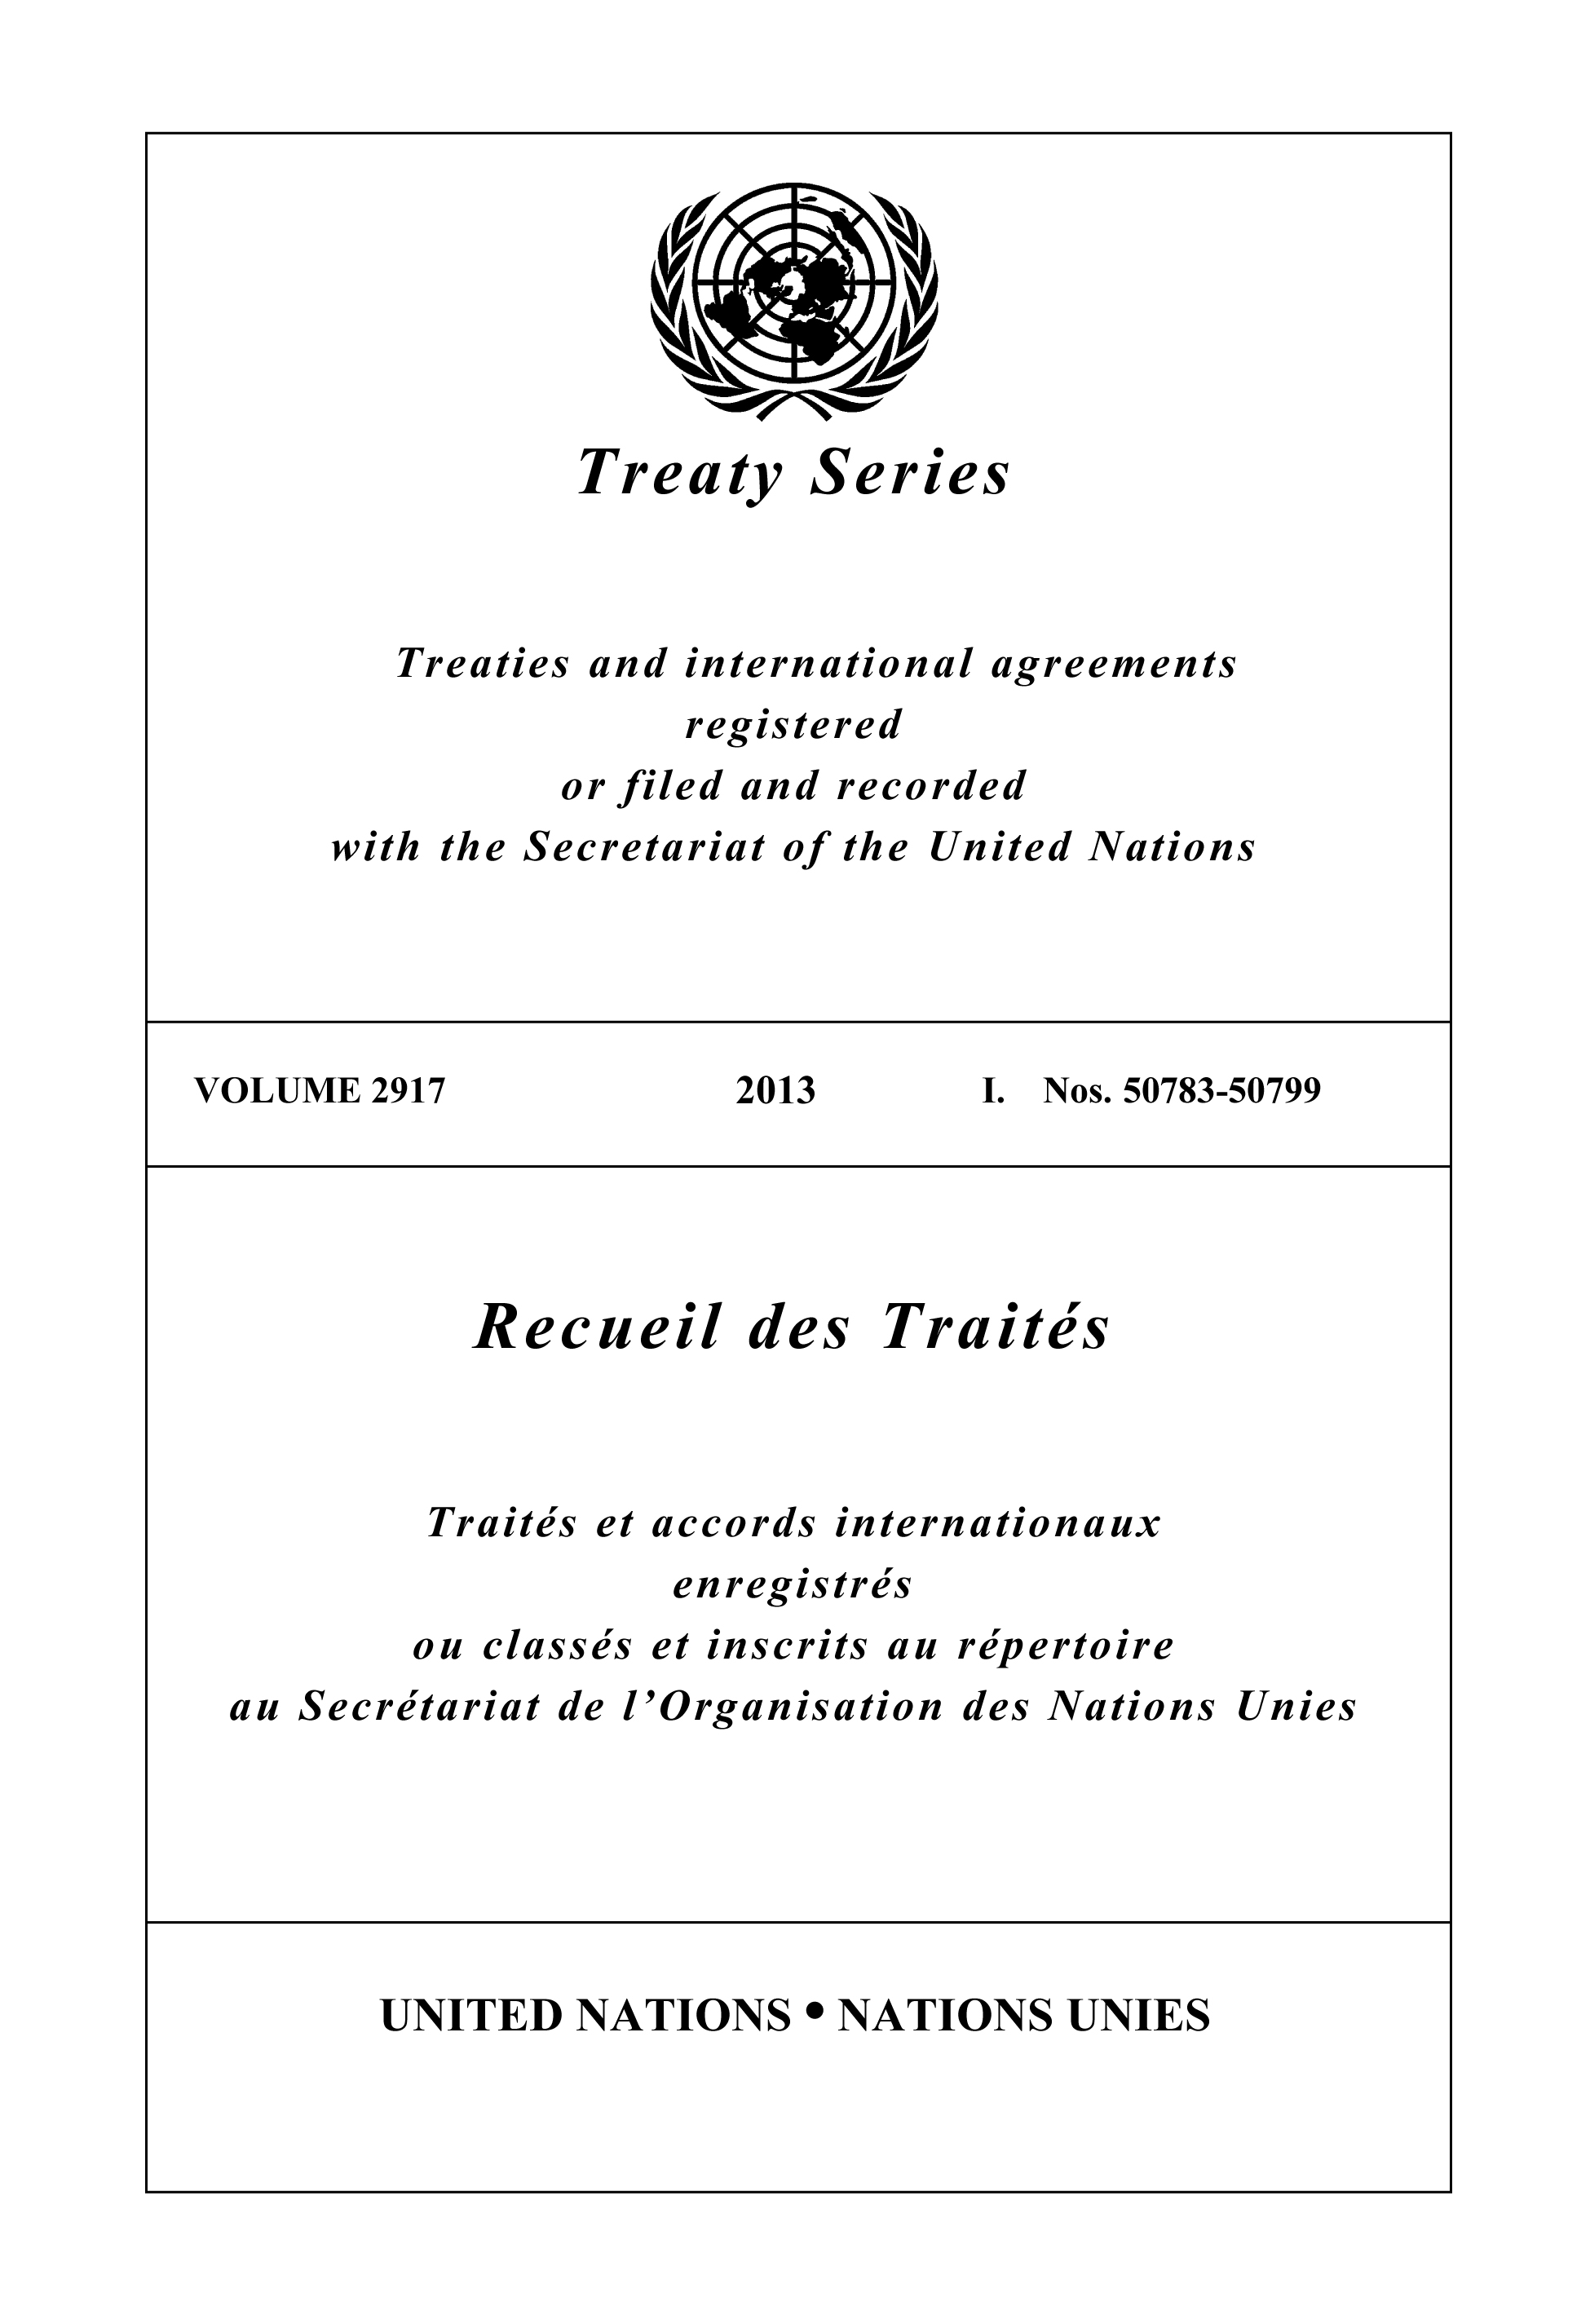 image of Treaty Series 2917